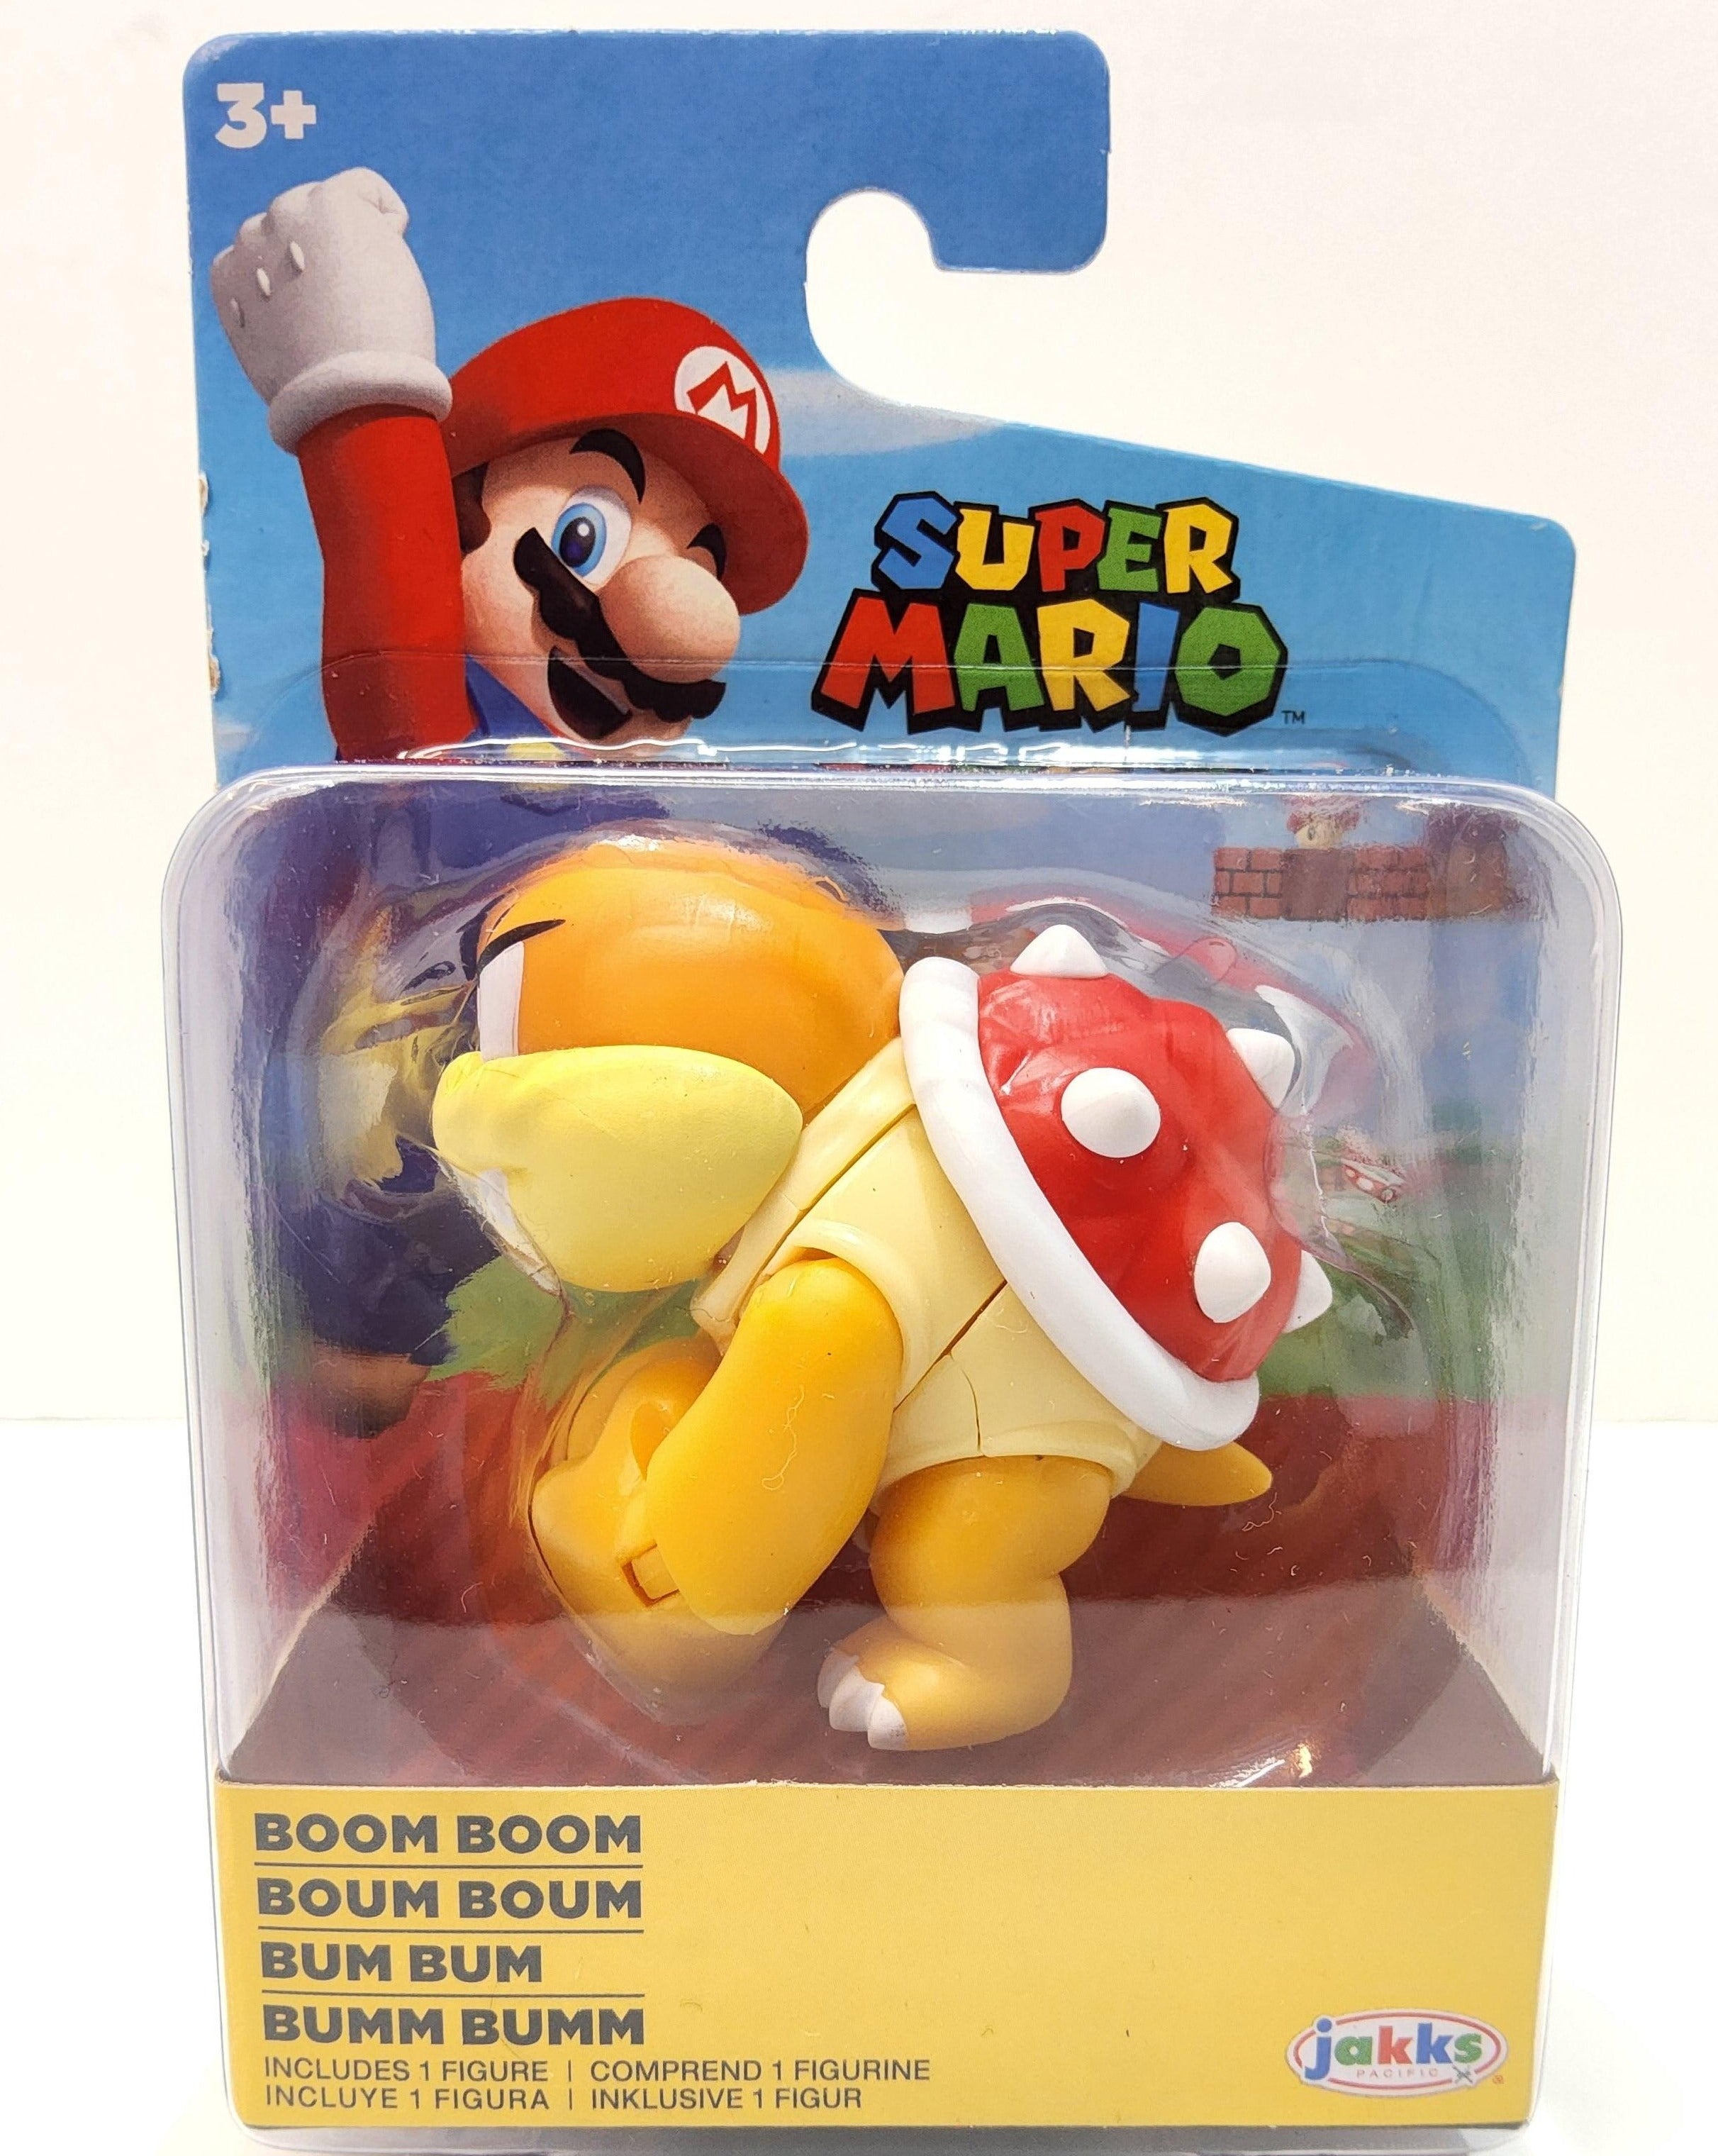 Nintendo Jakks Pacific Super Mario Brothers Super Mario & Bowser Jr. S –  Logan's Toy Chest